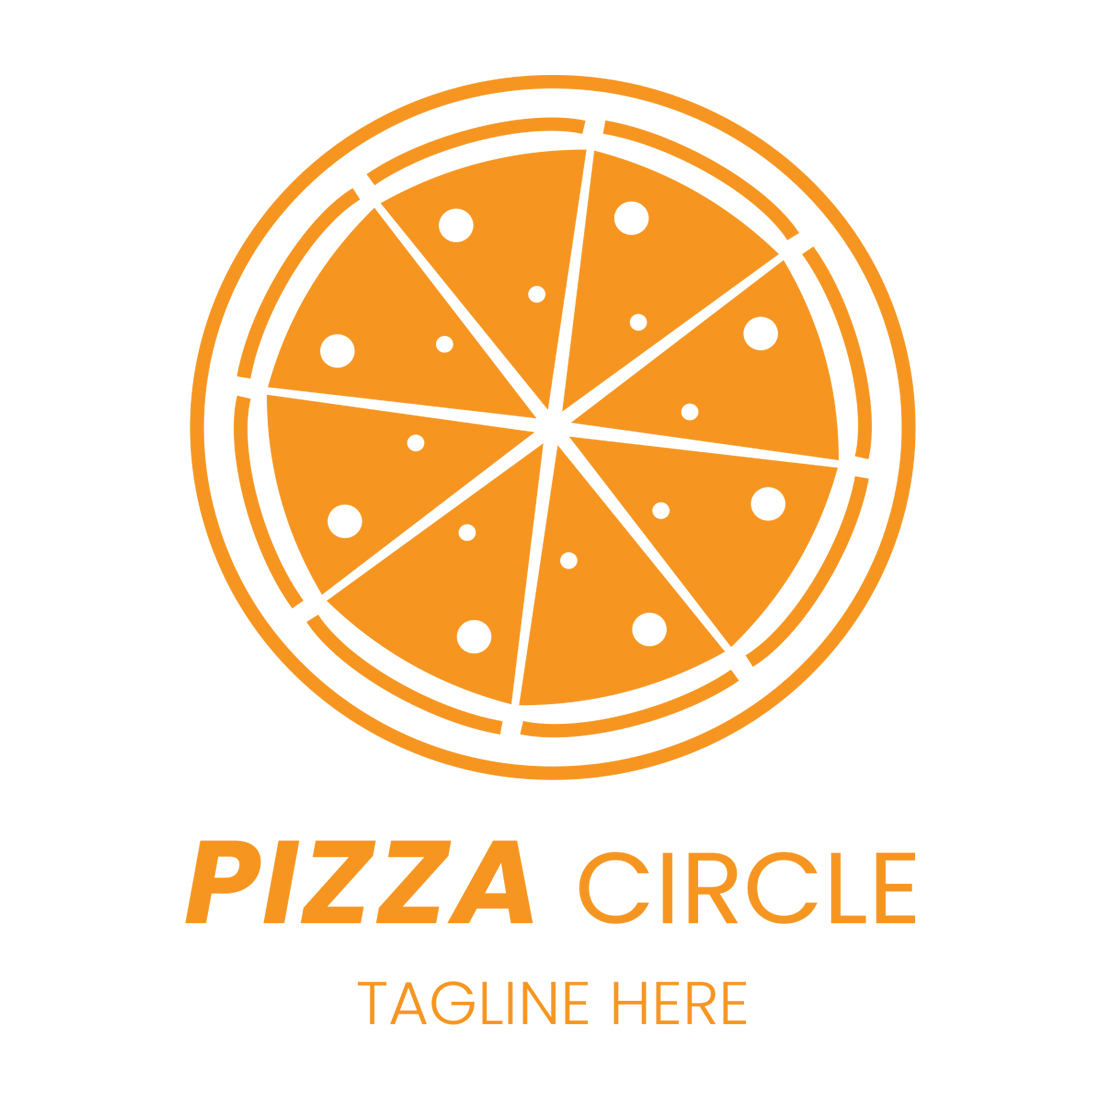 pizza circle logo preview image.